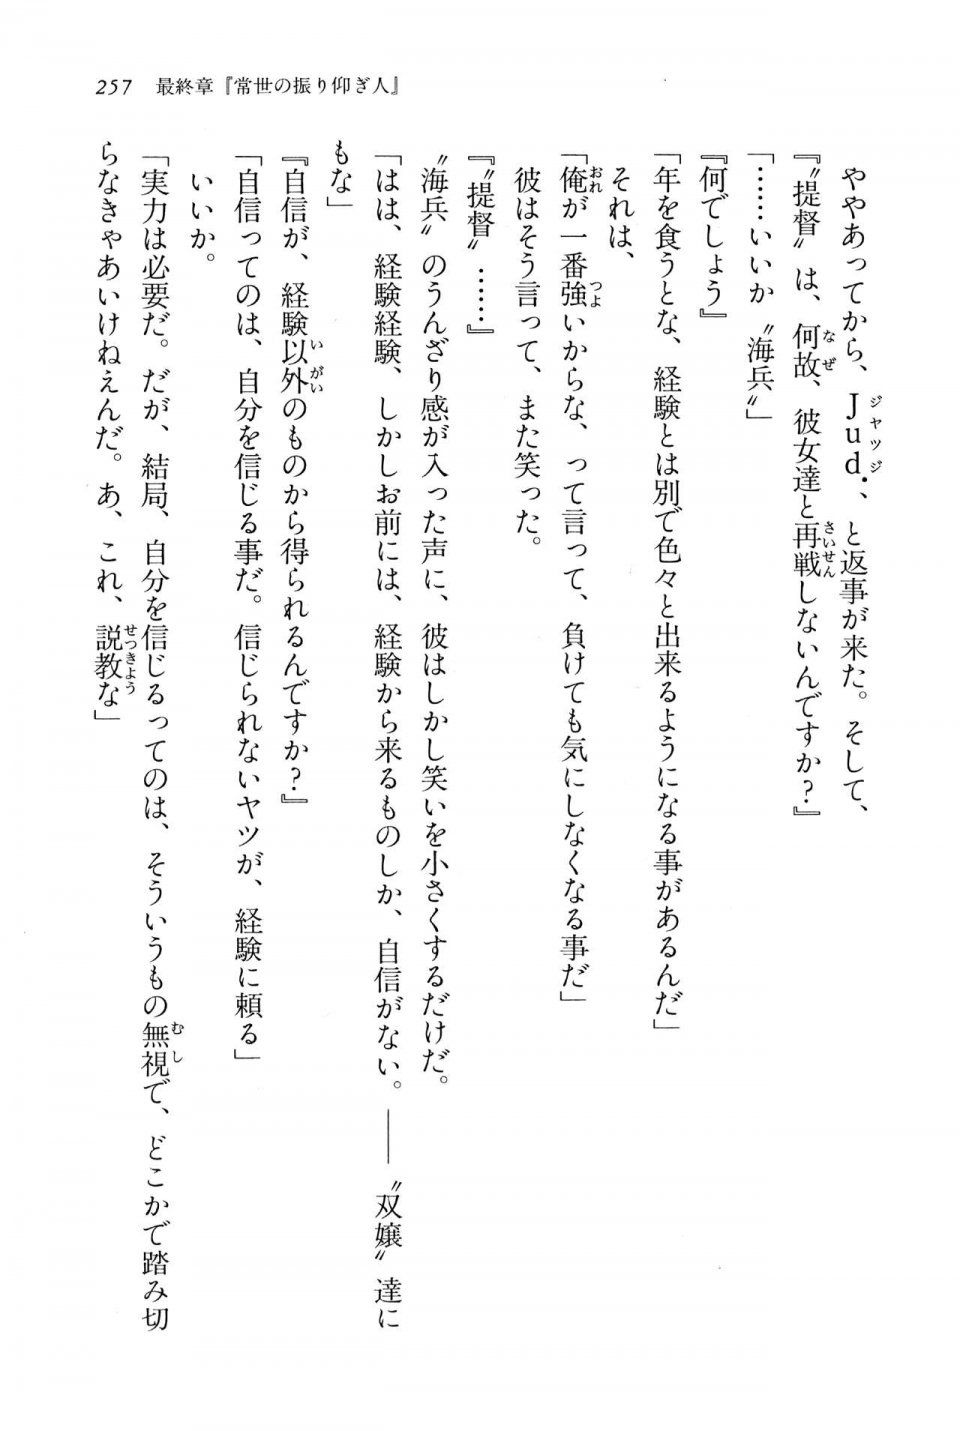 Kyoukai Senjou no Horizon BD Special Mininovel Vol 6(3B) - Photo #261